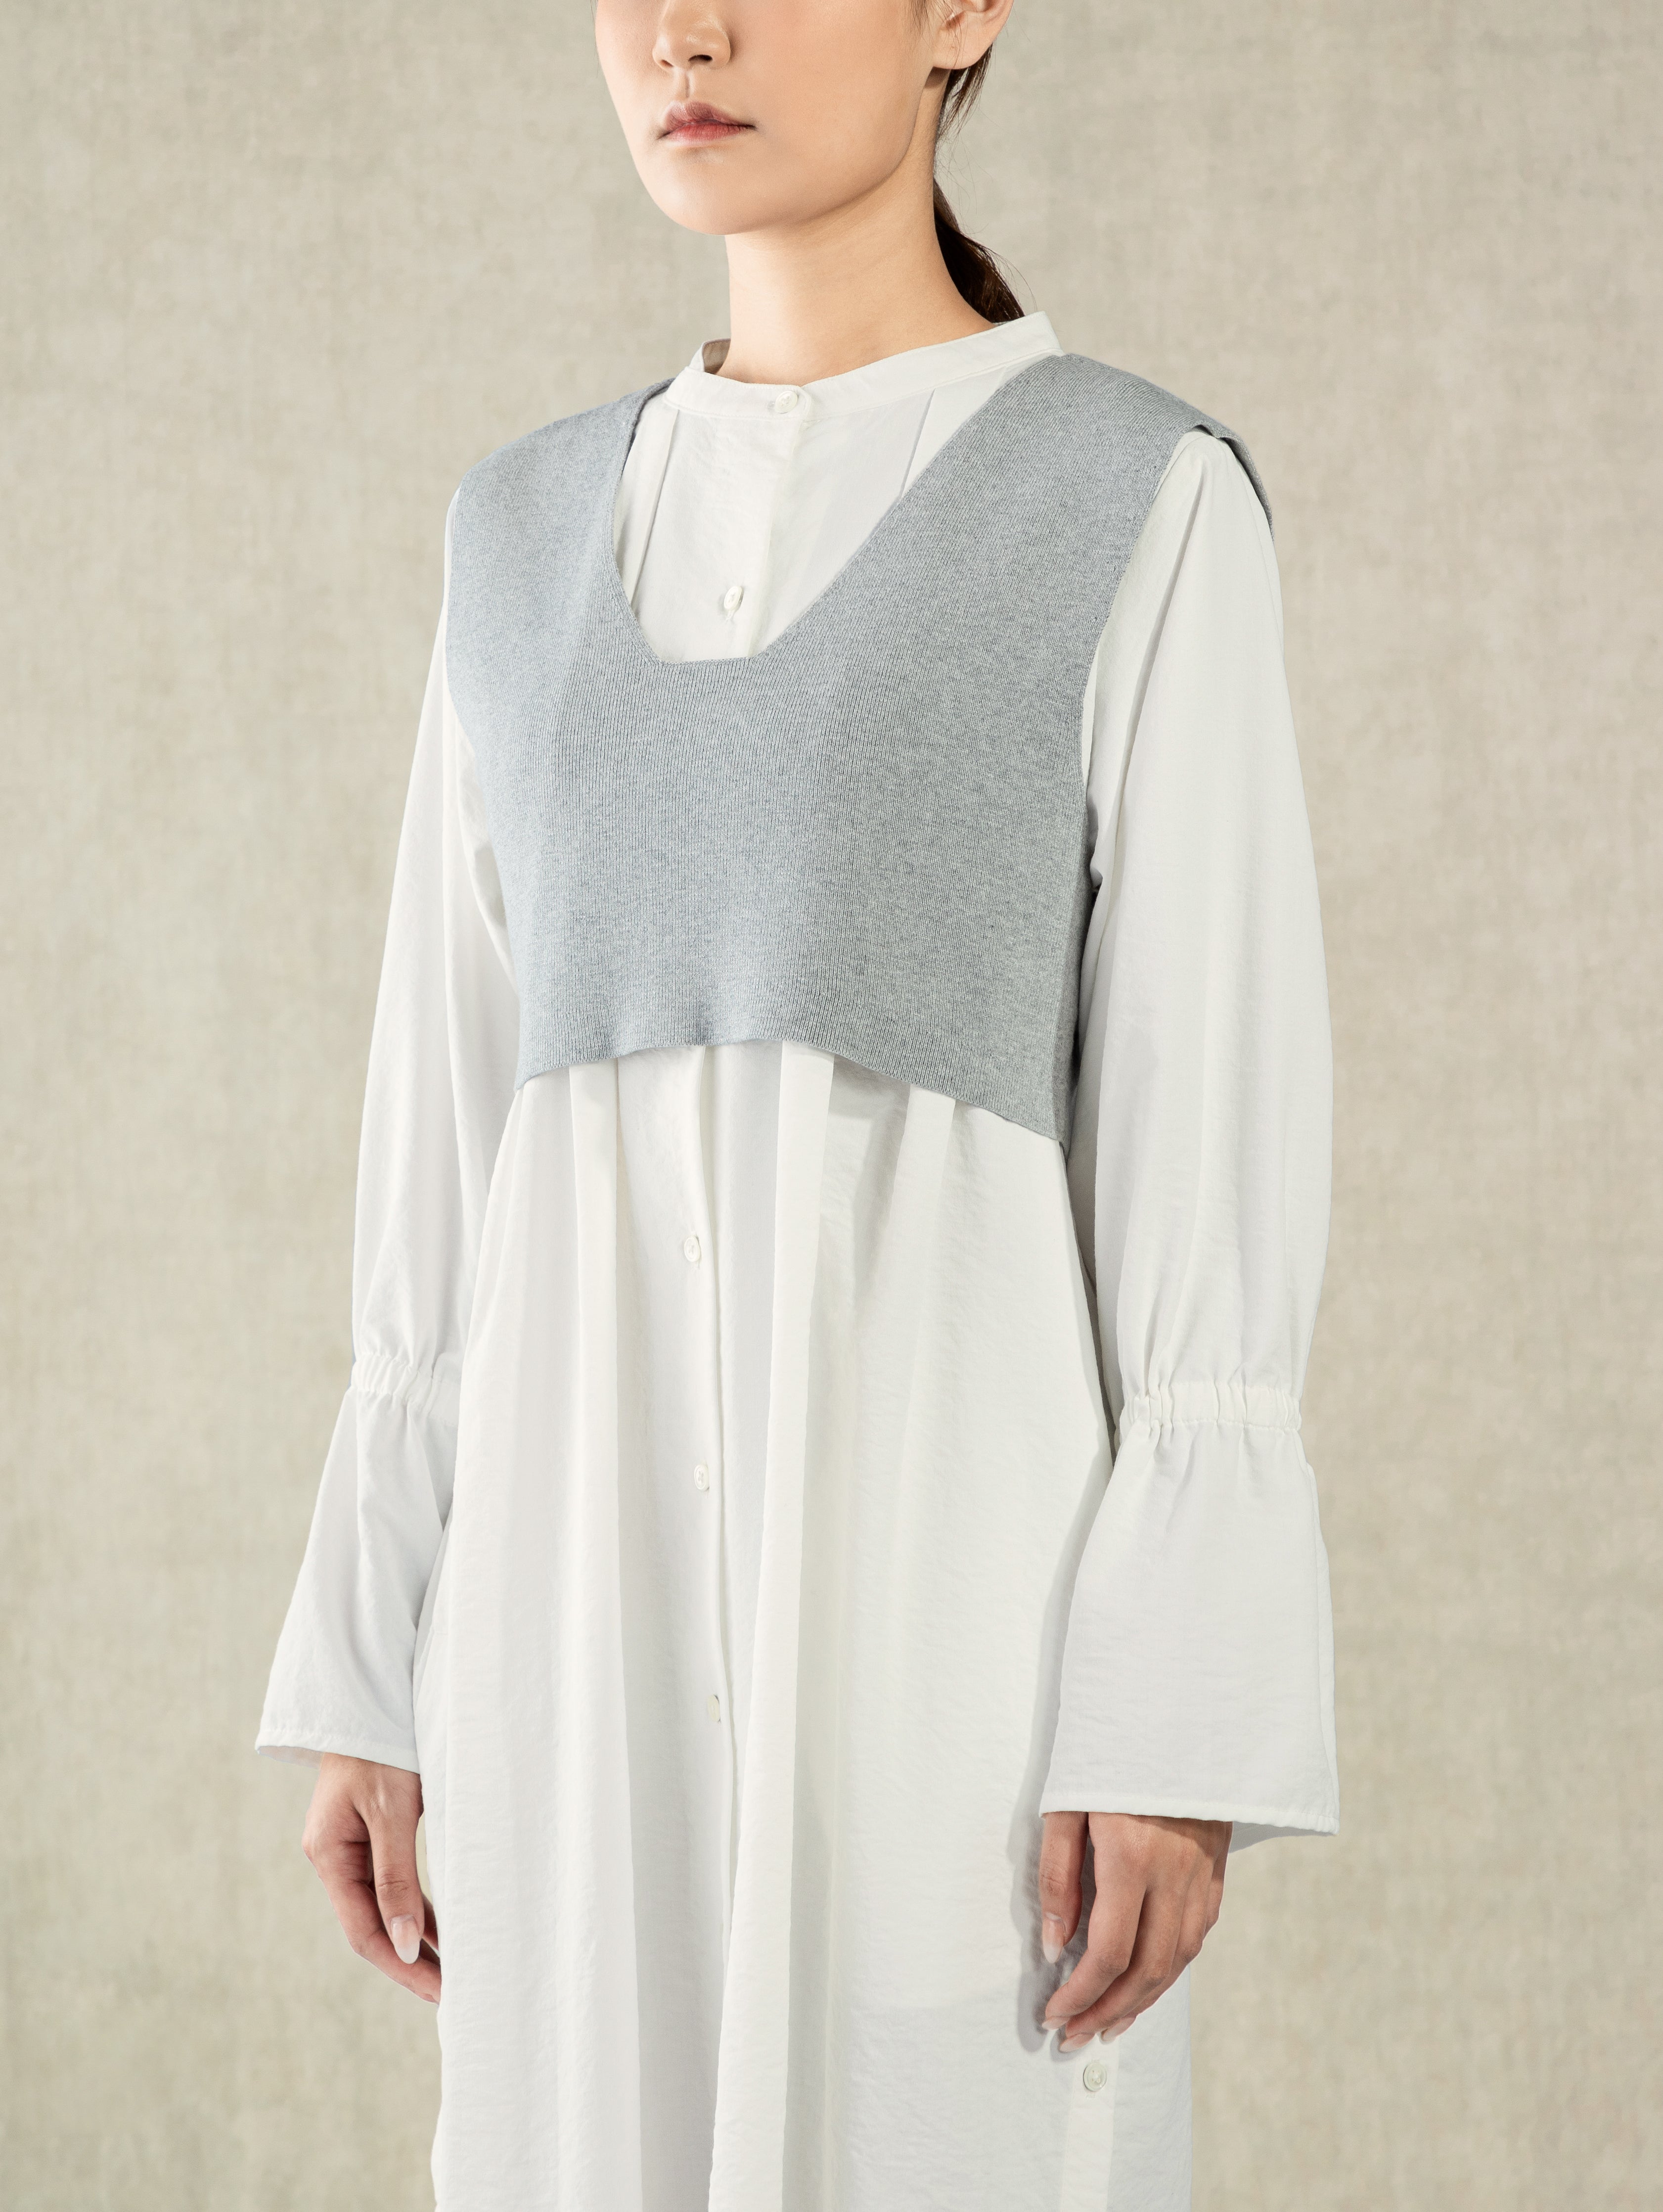 Flint Grey Heather Cropped Sweater Vest Womens Sleeveless